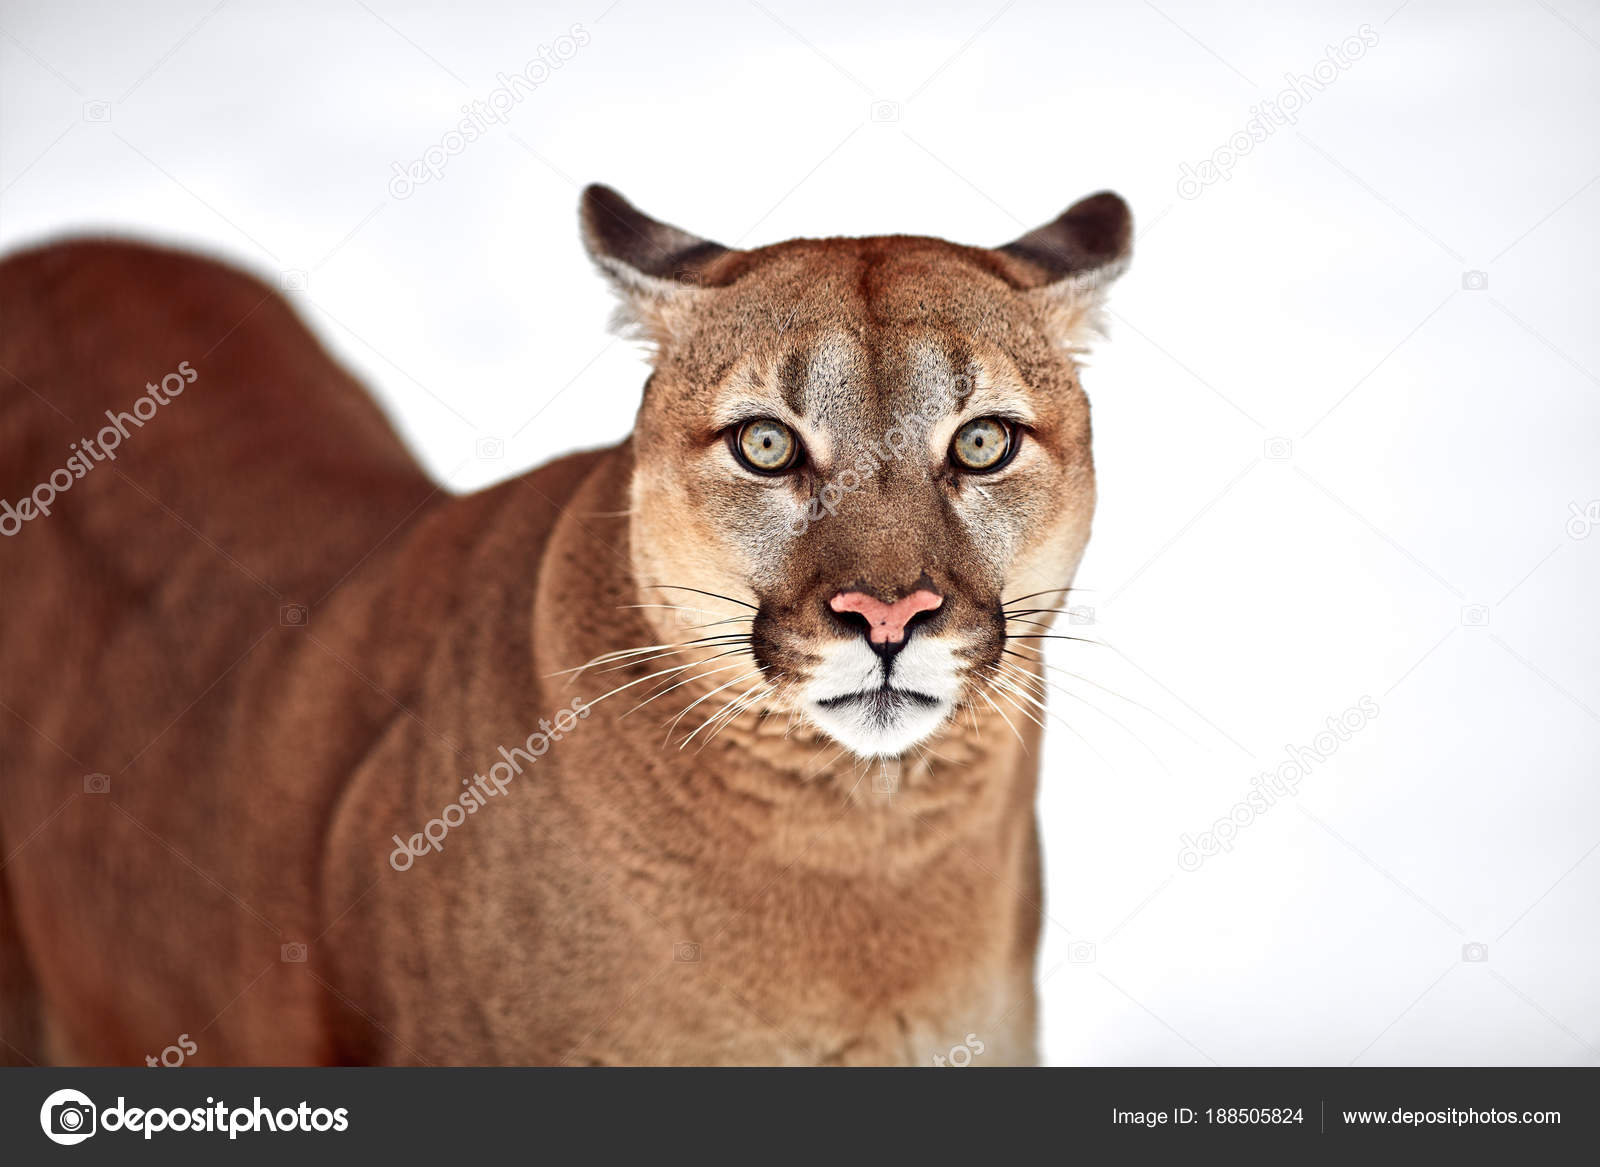 Canadian Cougar. mountain lion 